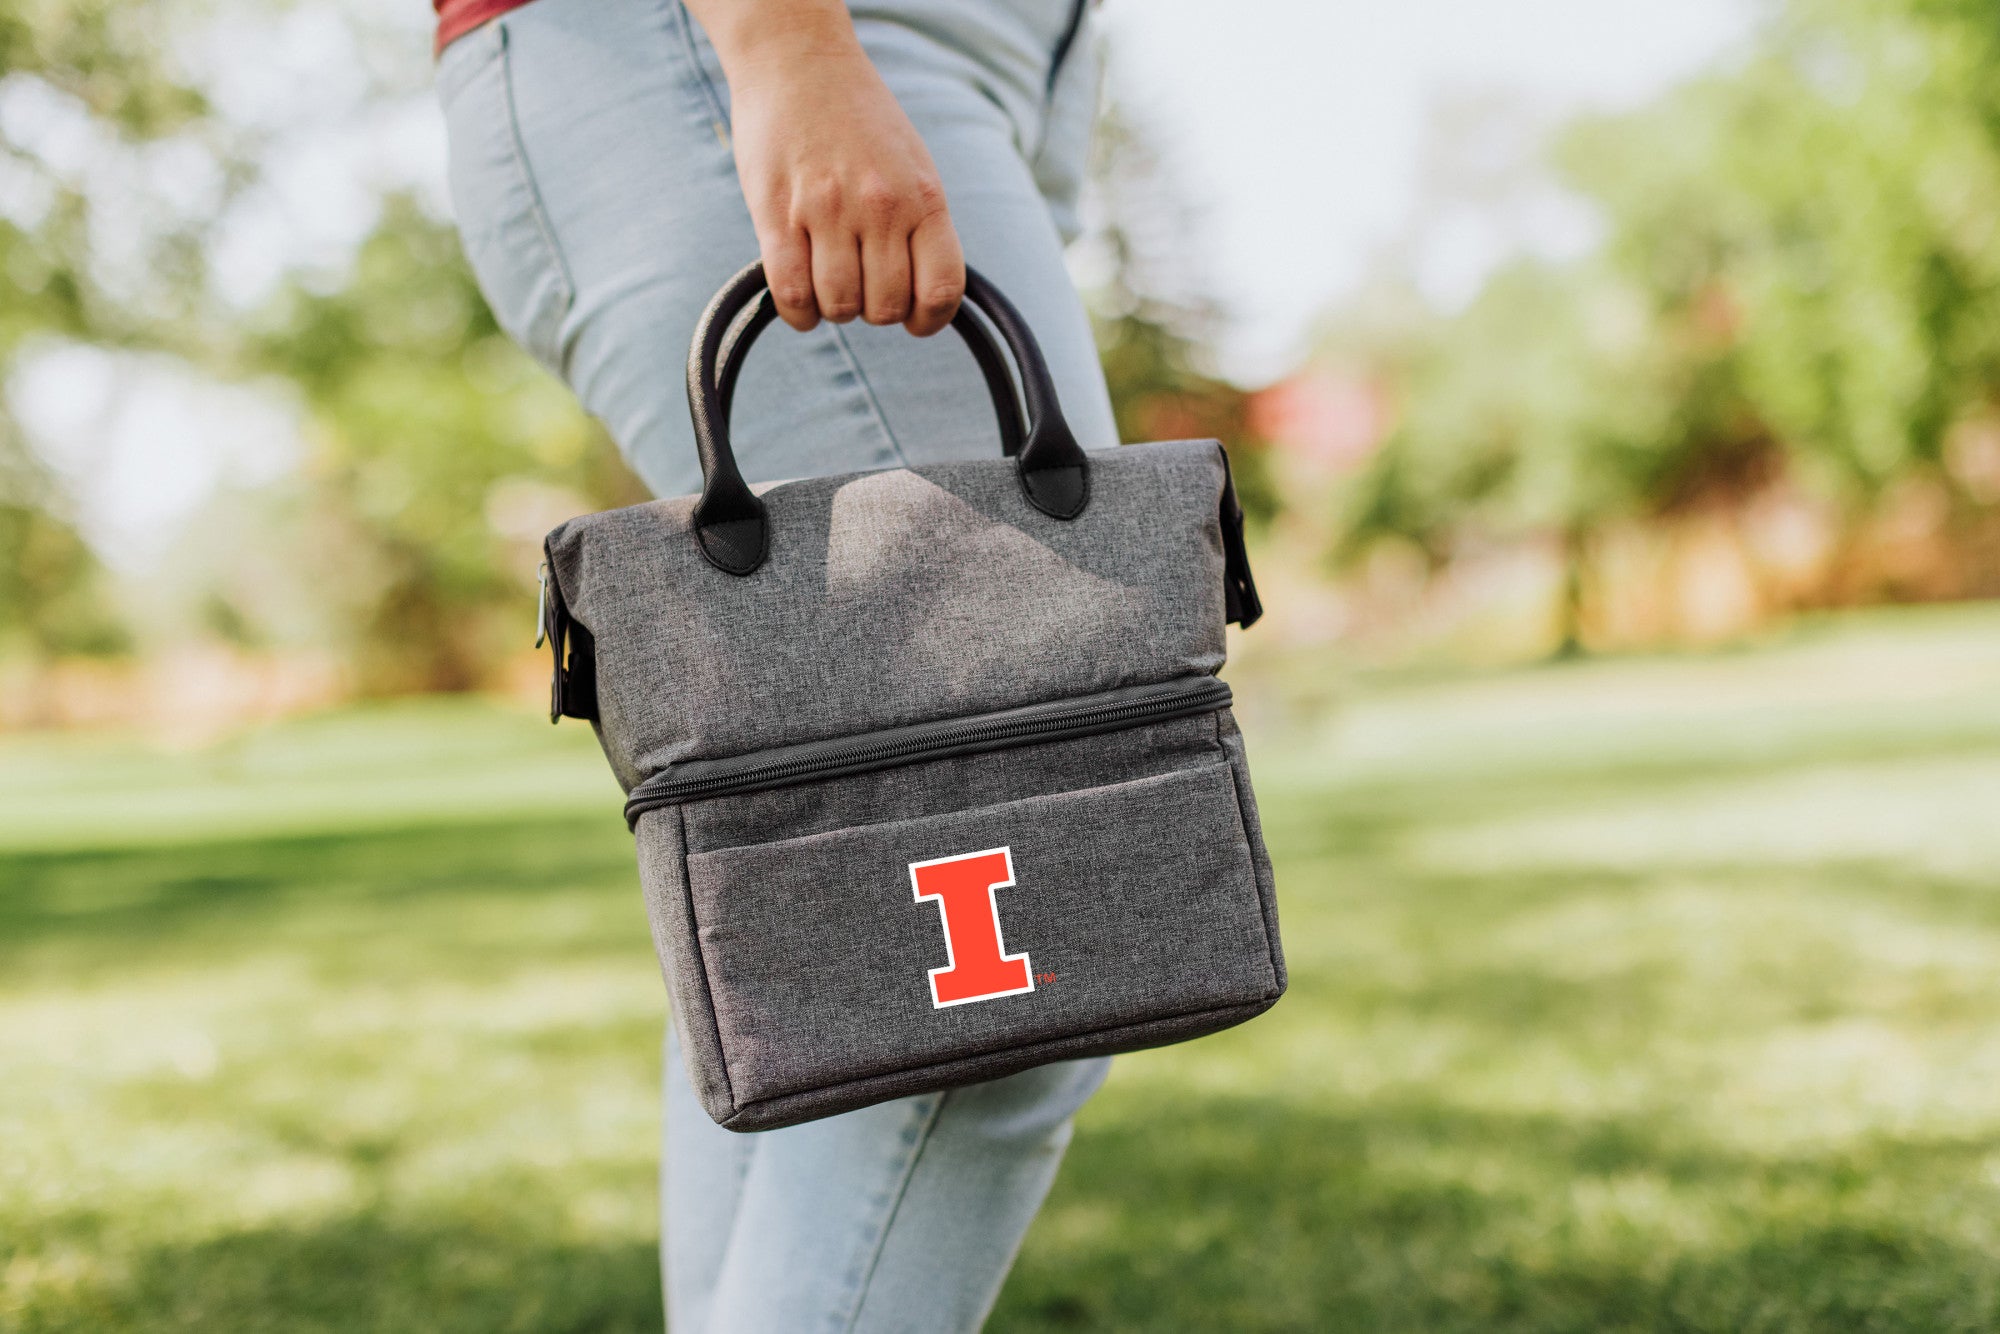 Illinois Fighting Illini - Urban Lunch Bag Cooler